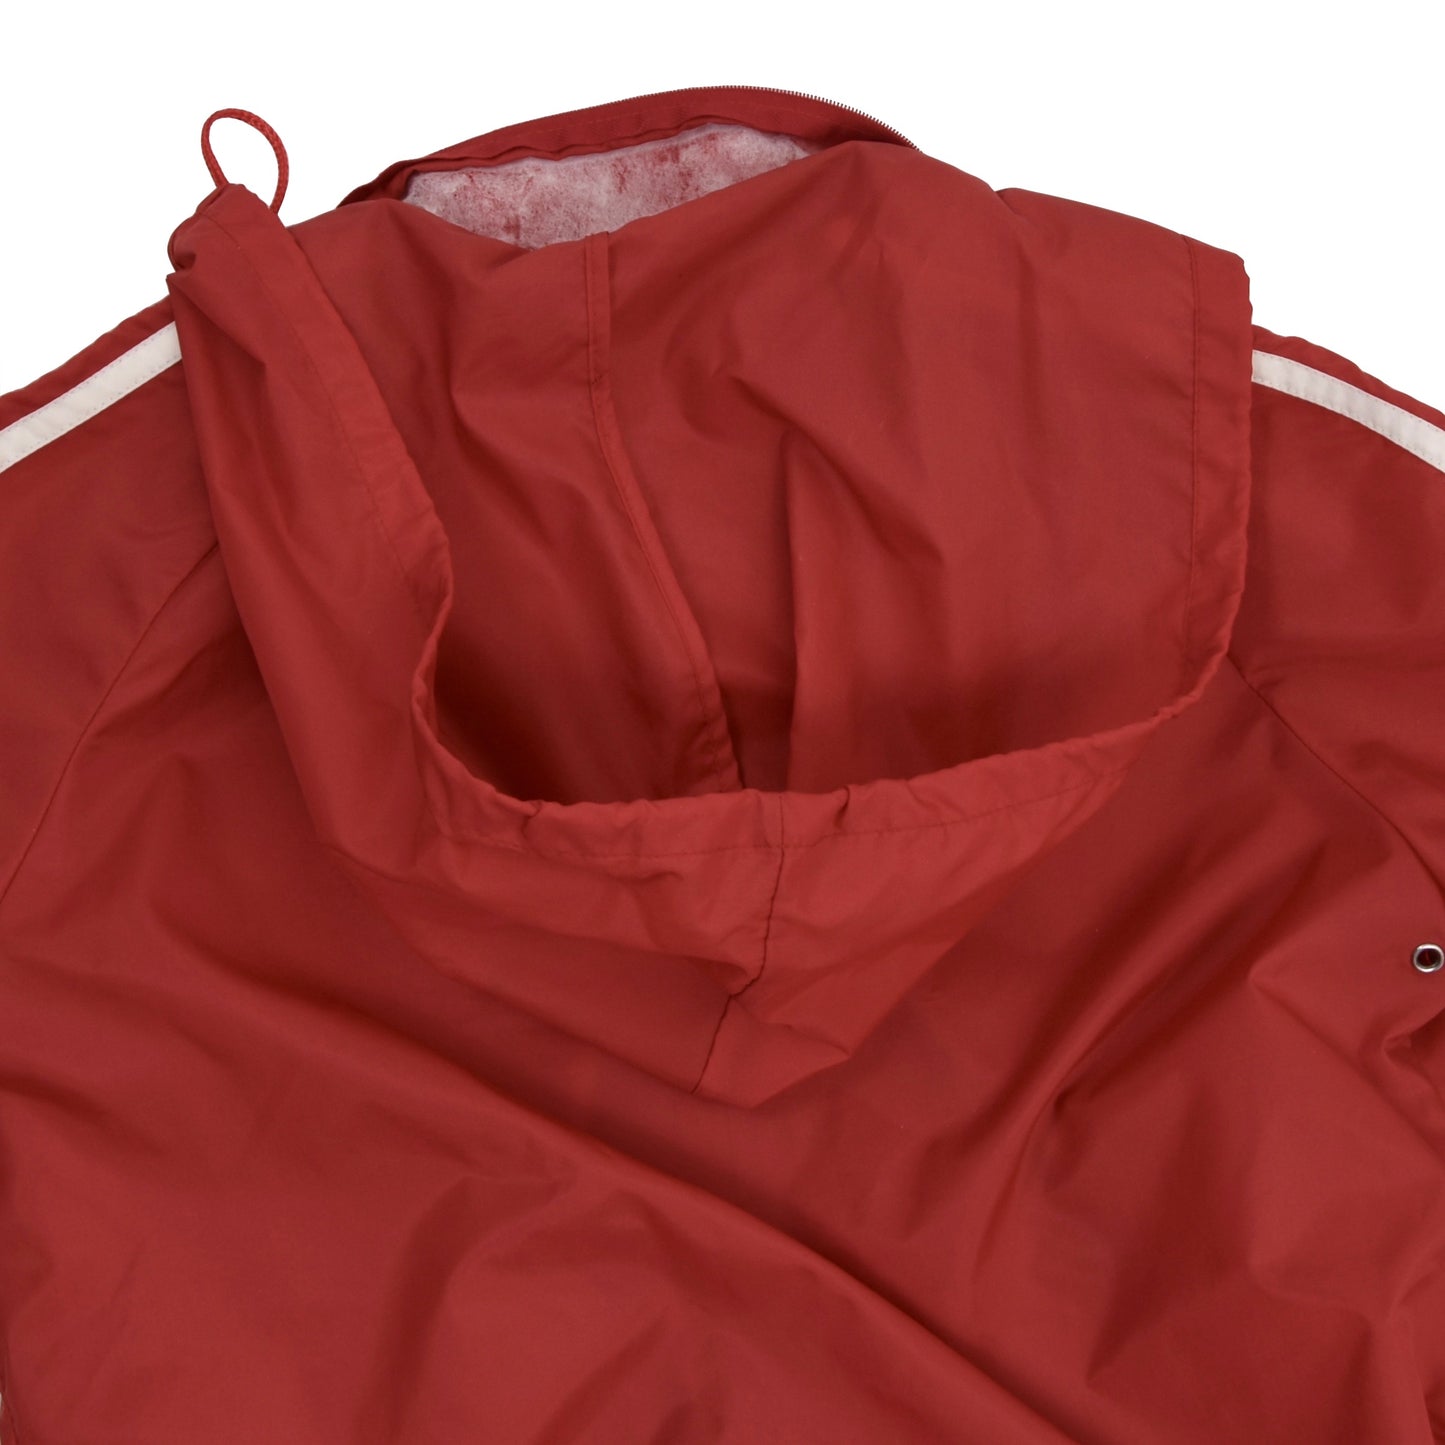 Vintage '80s Adidas Nylon Rain Jacket Size D38 - Red